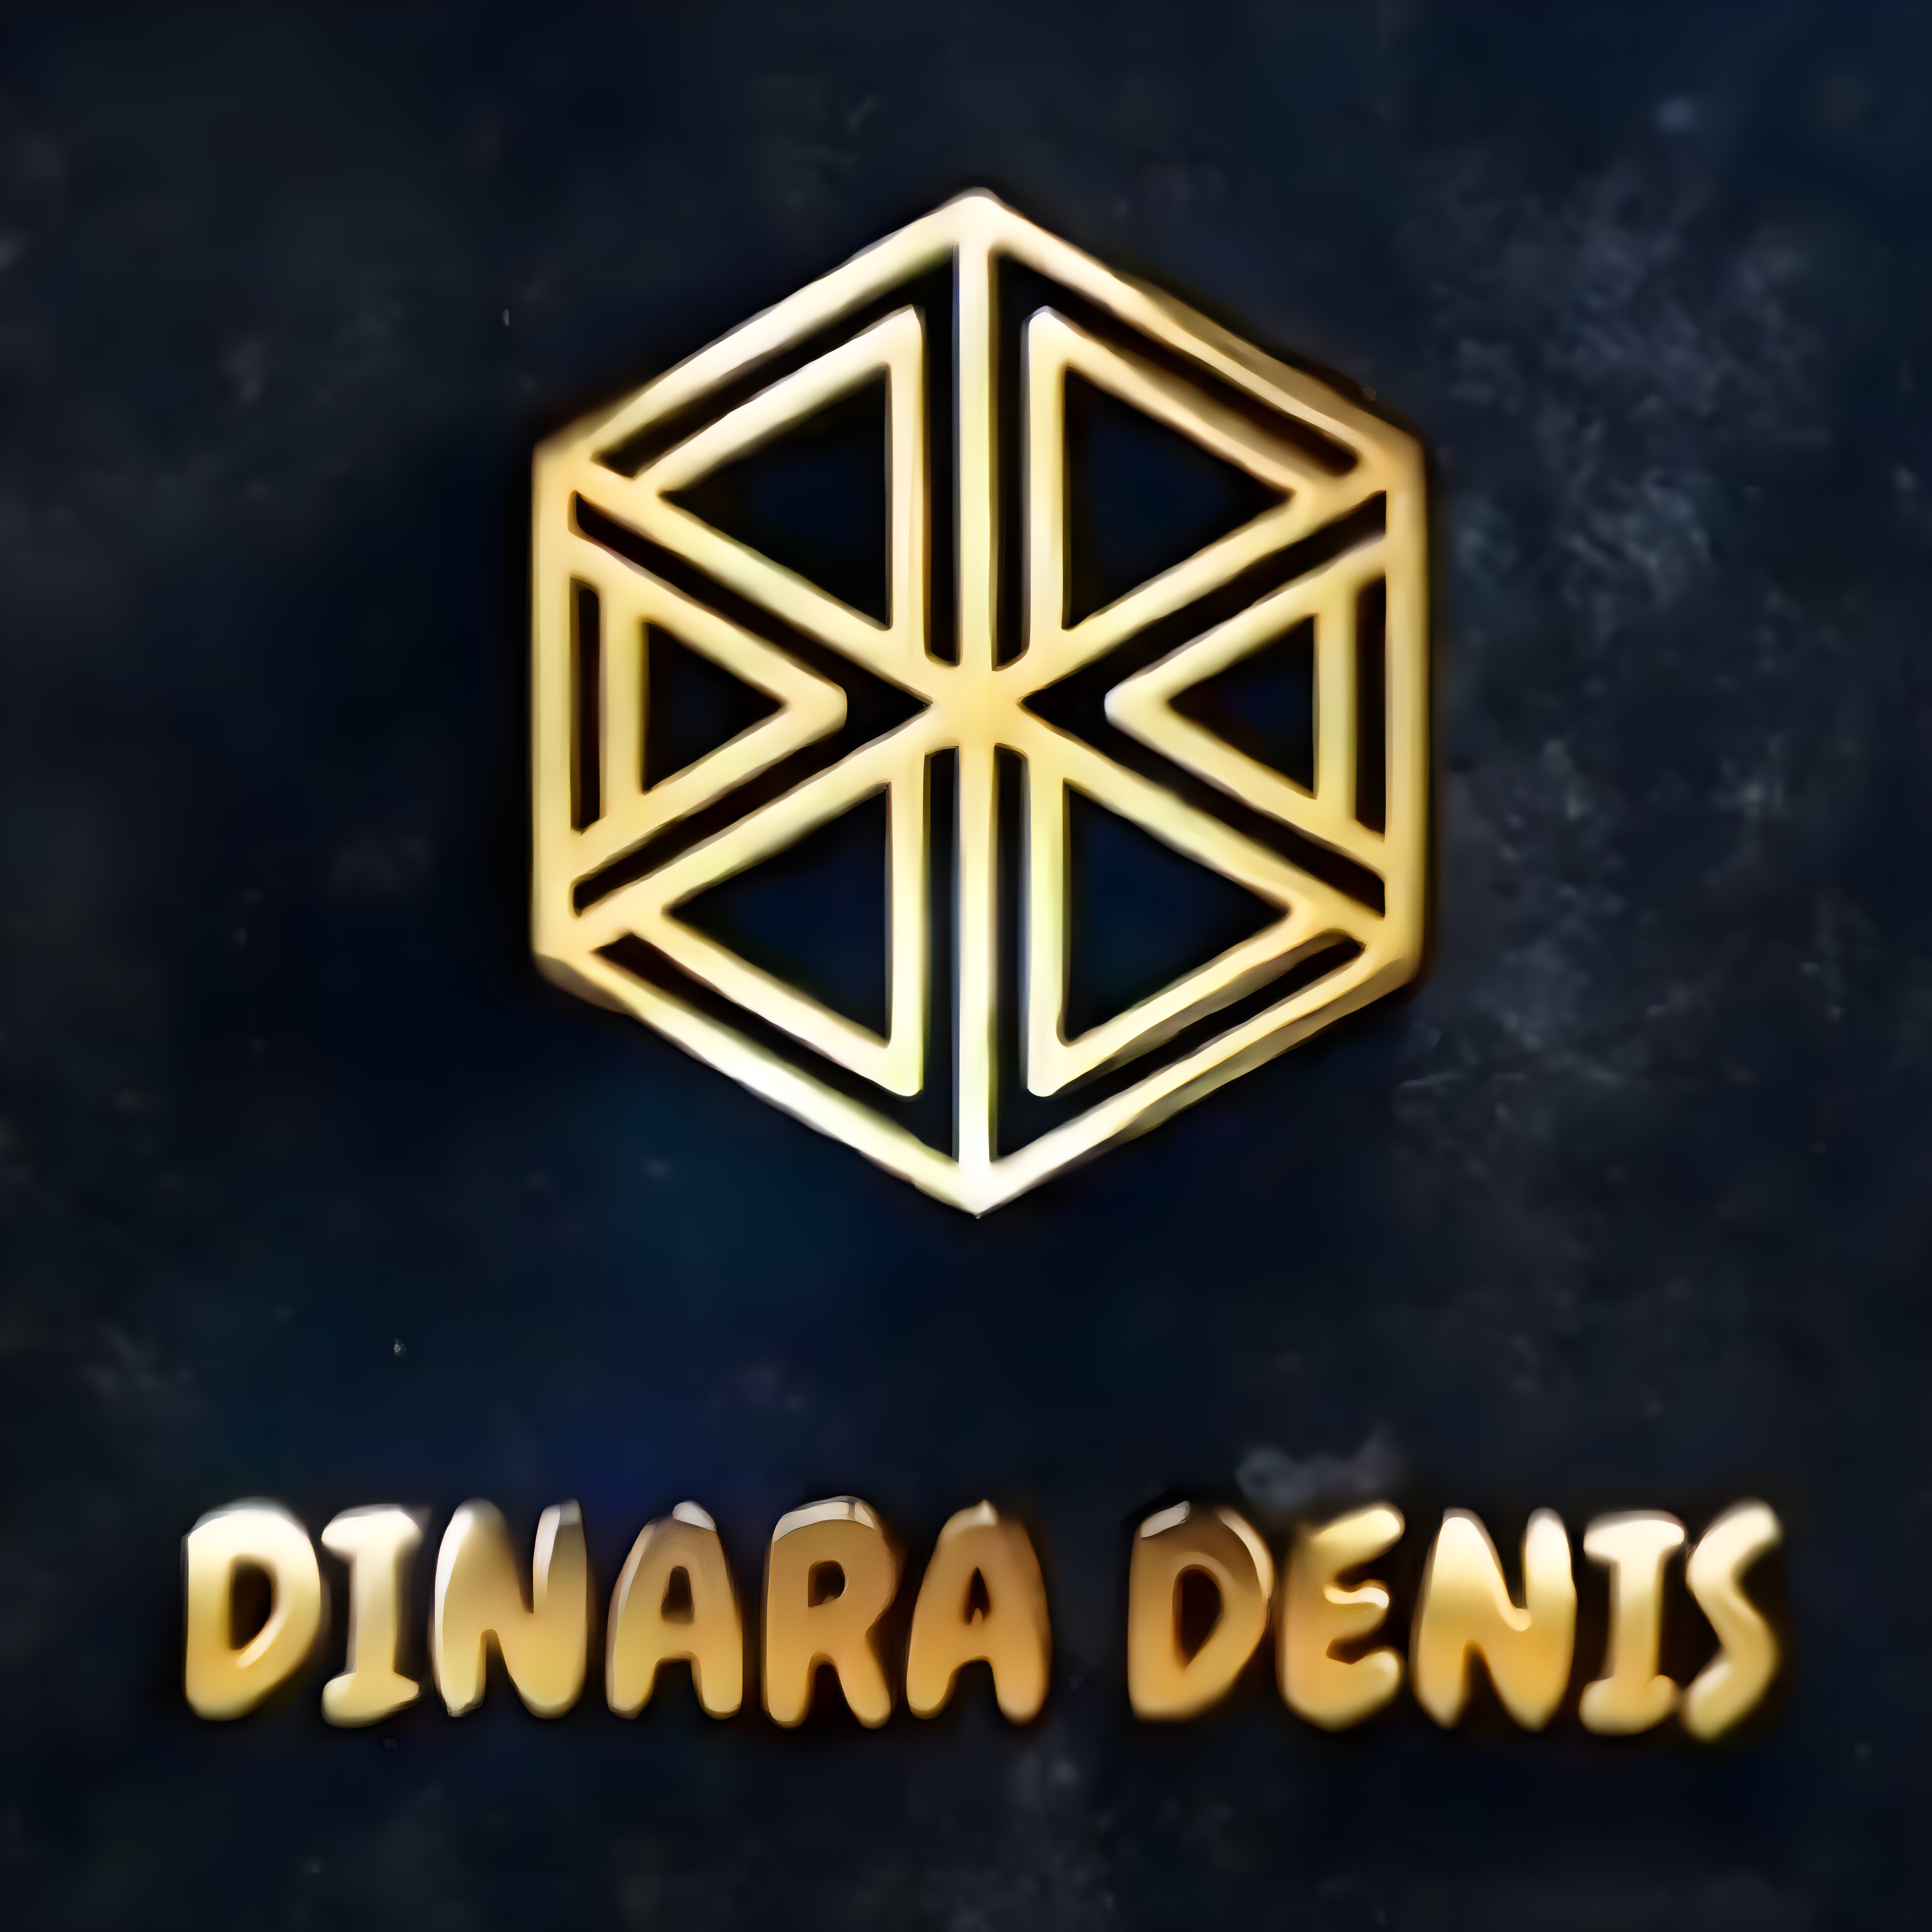 Dinara Denis Logo / Icon.